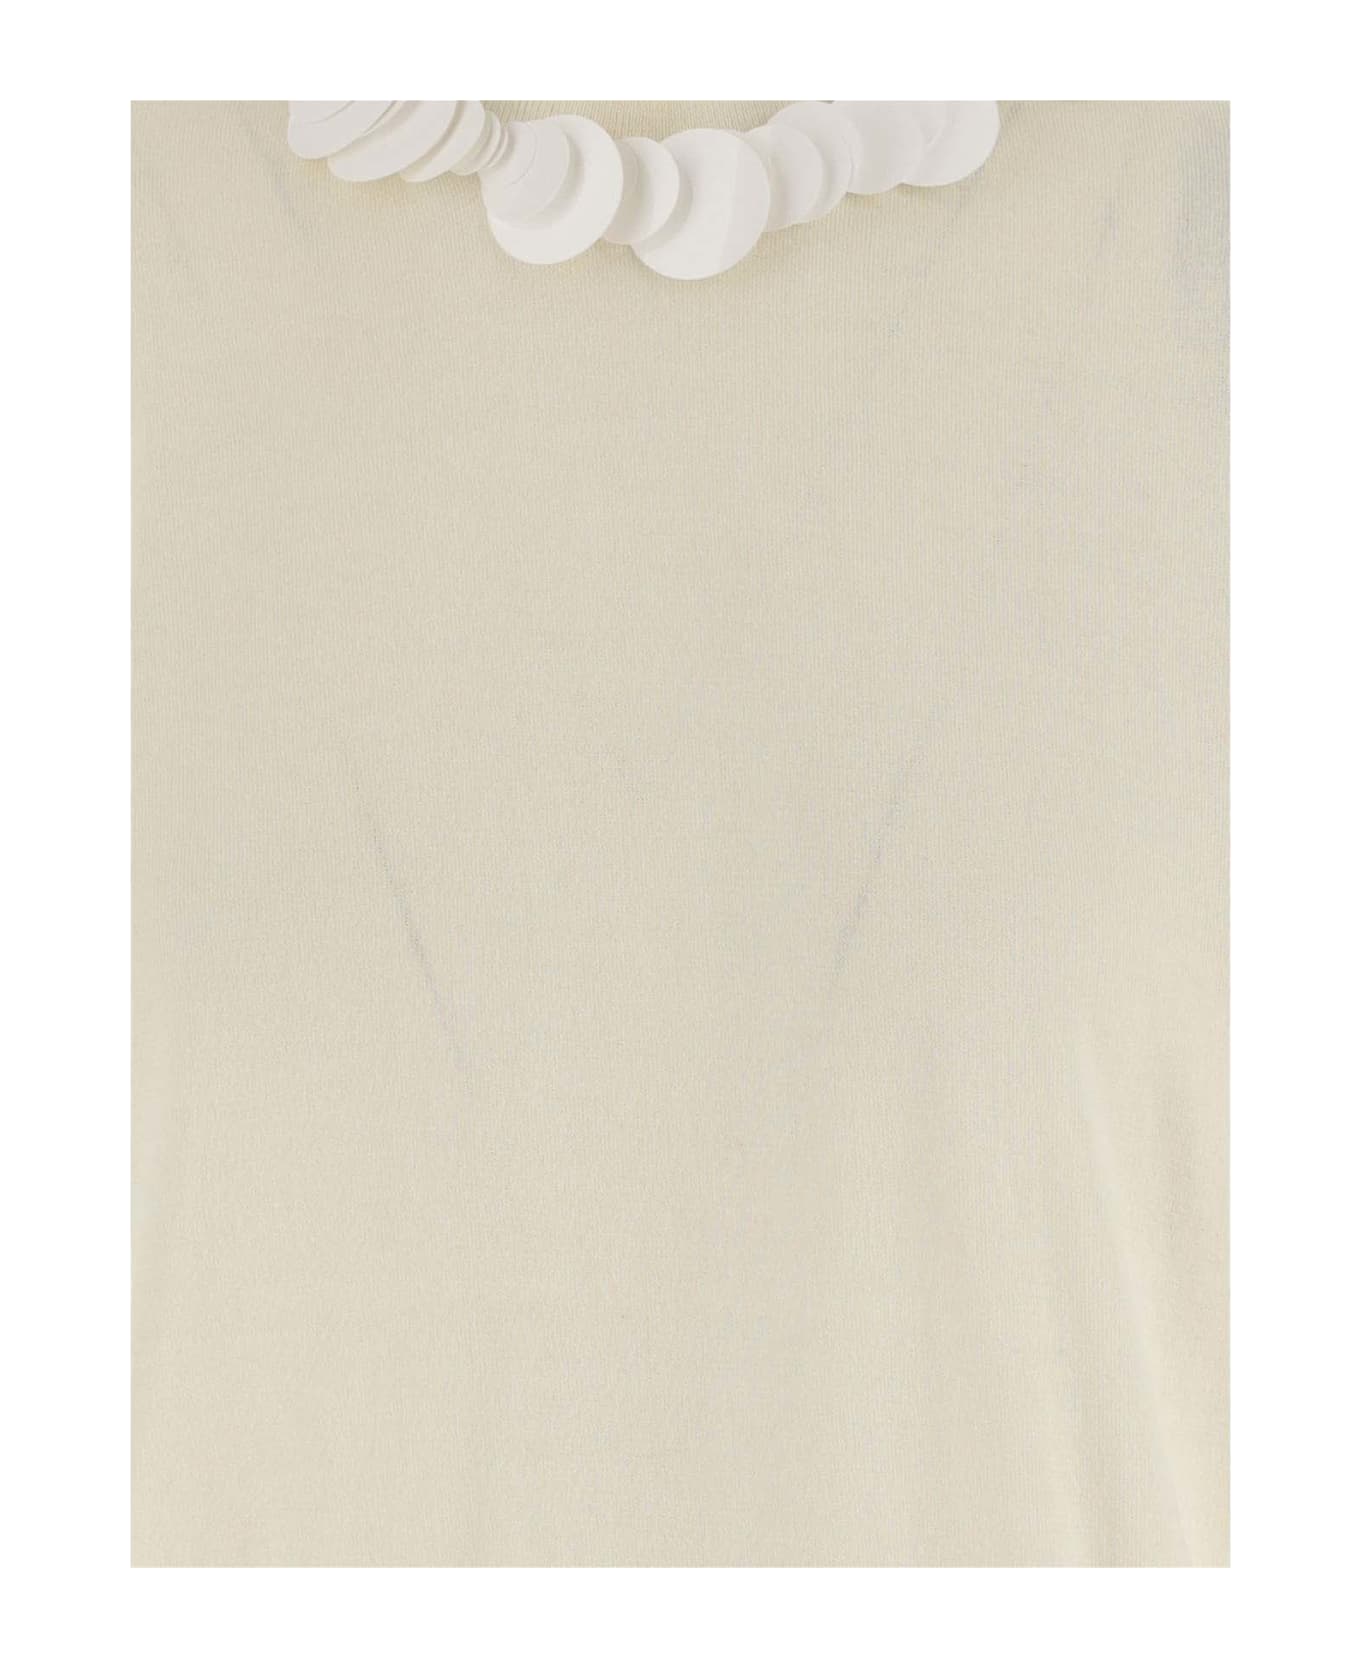 Jil Sander Sequined Cotton Knit Top - Ivory